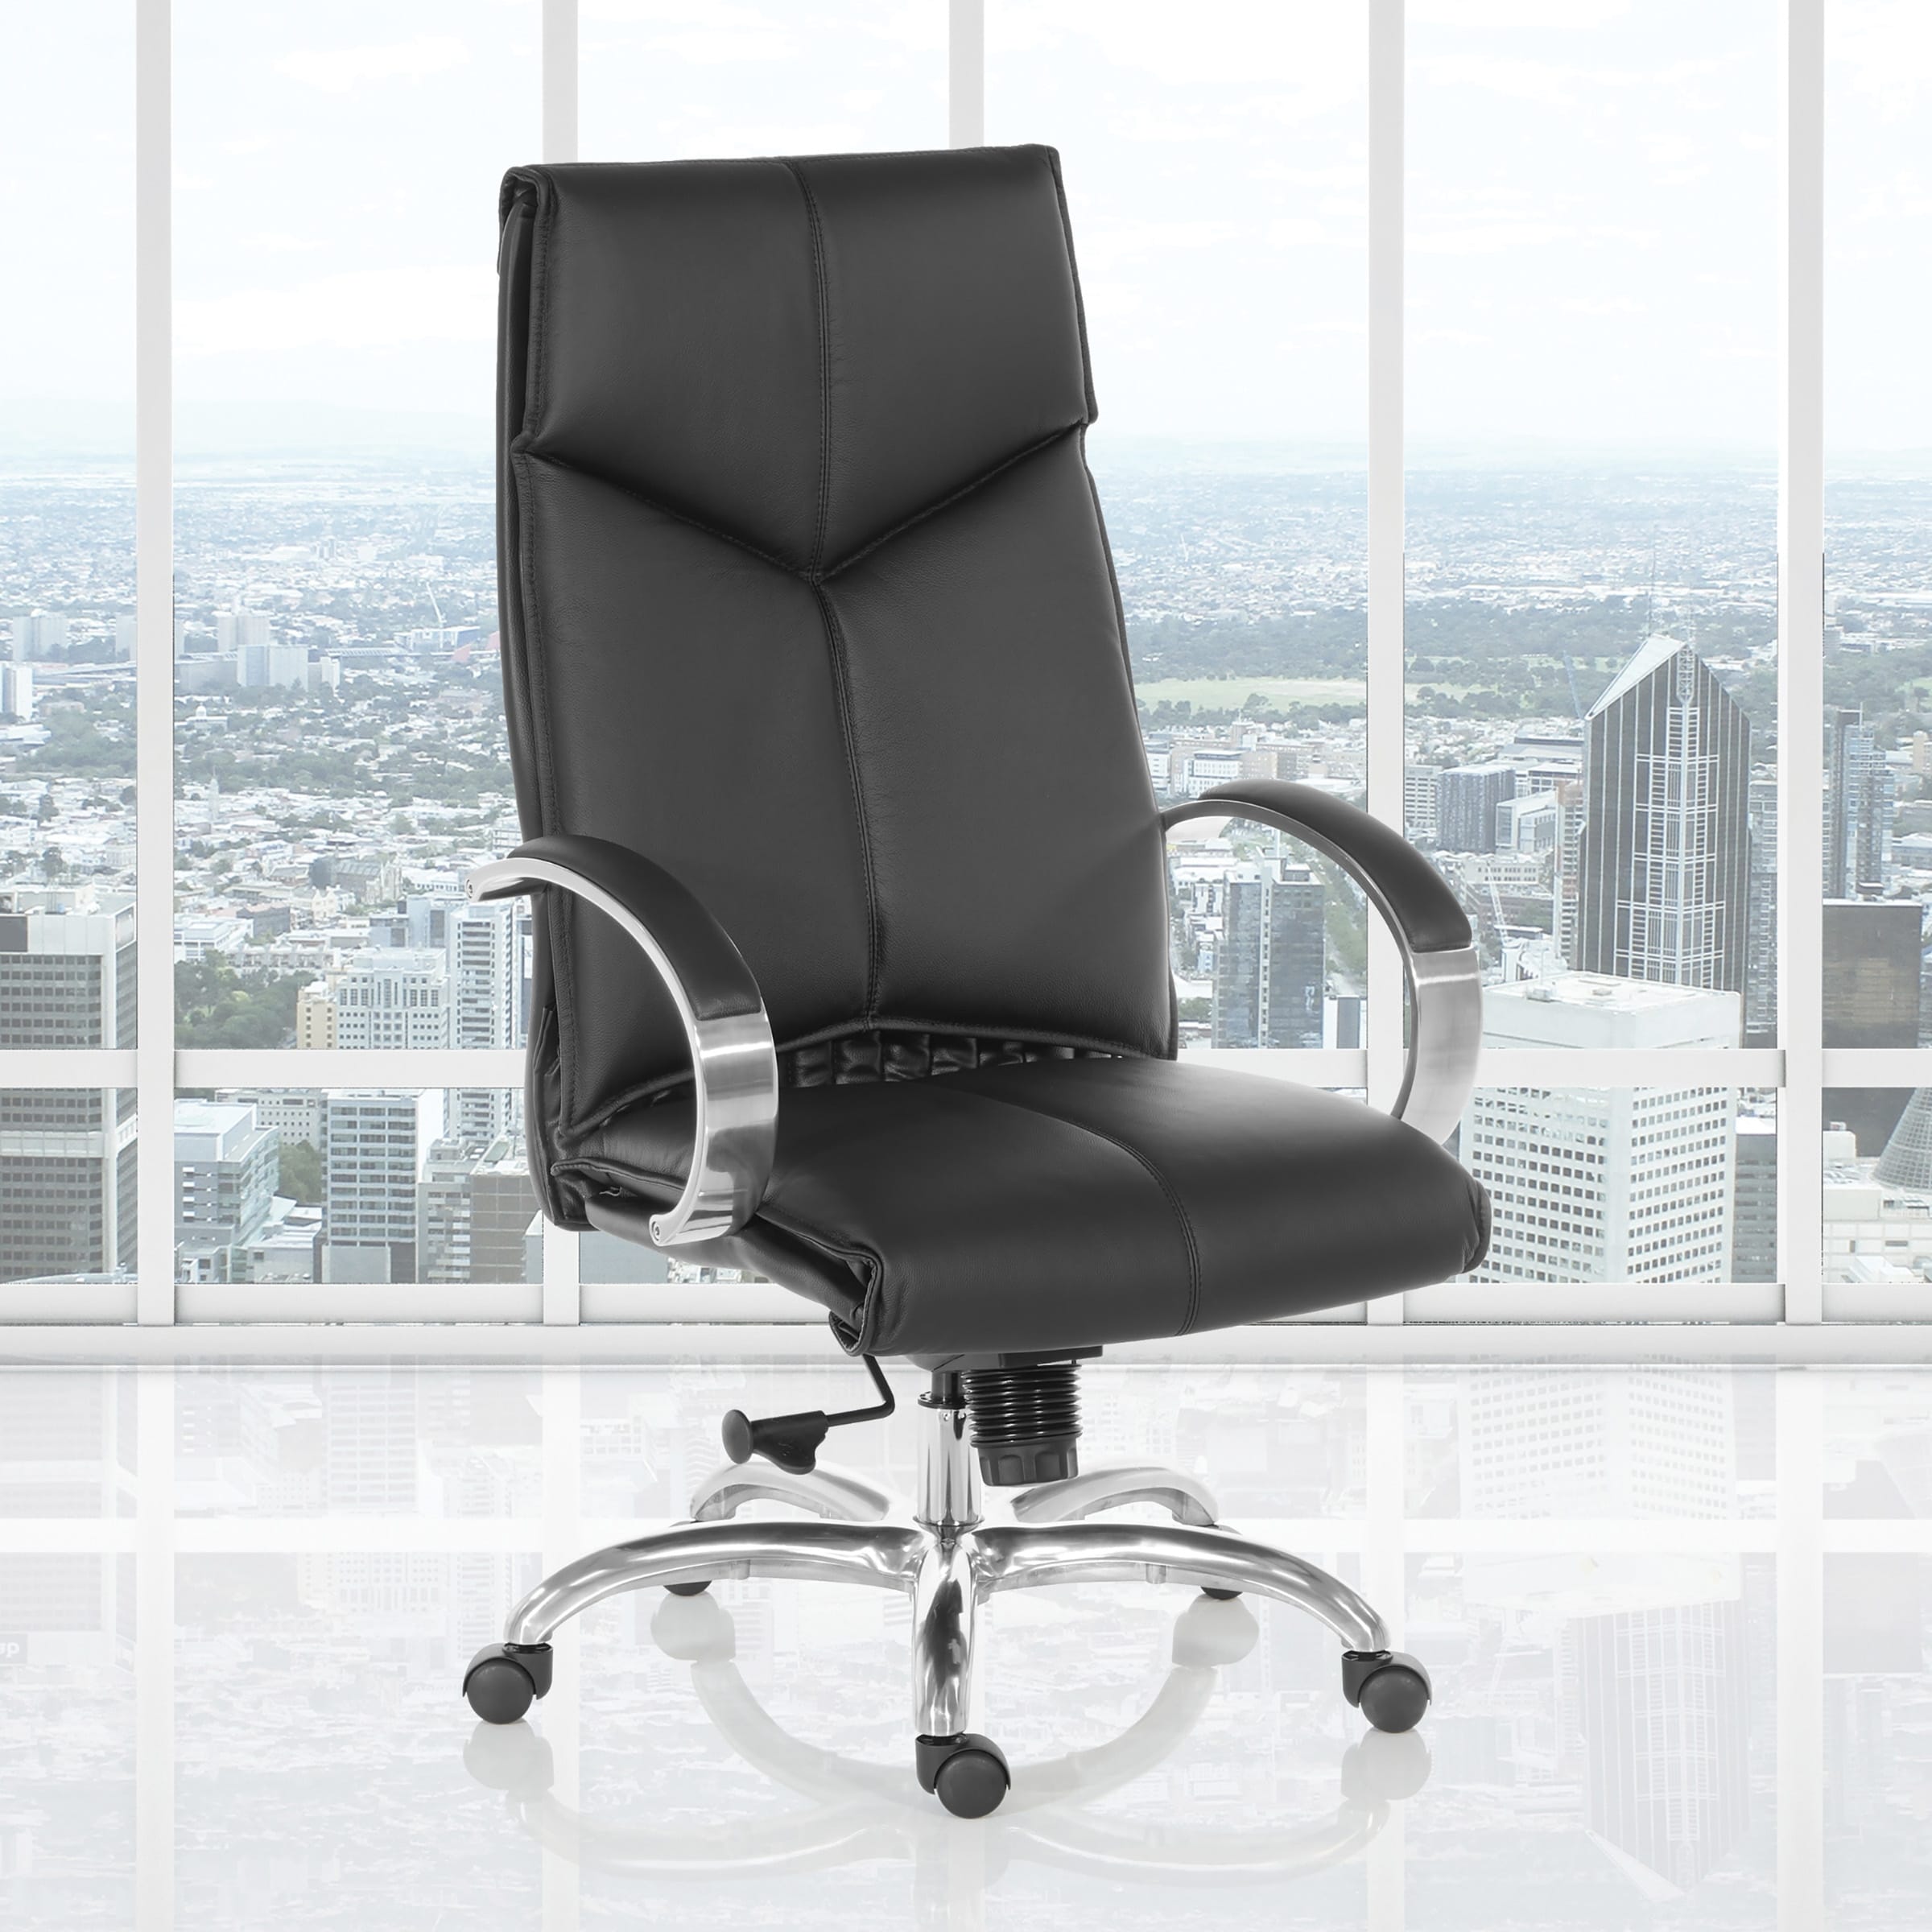 Office Star Executive High Back Chair